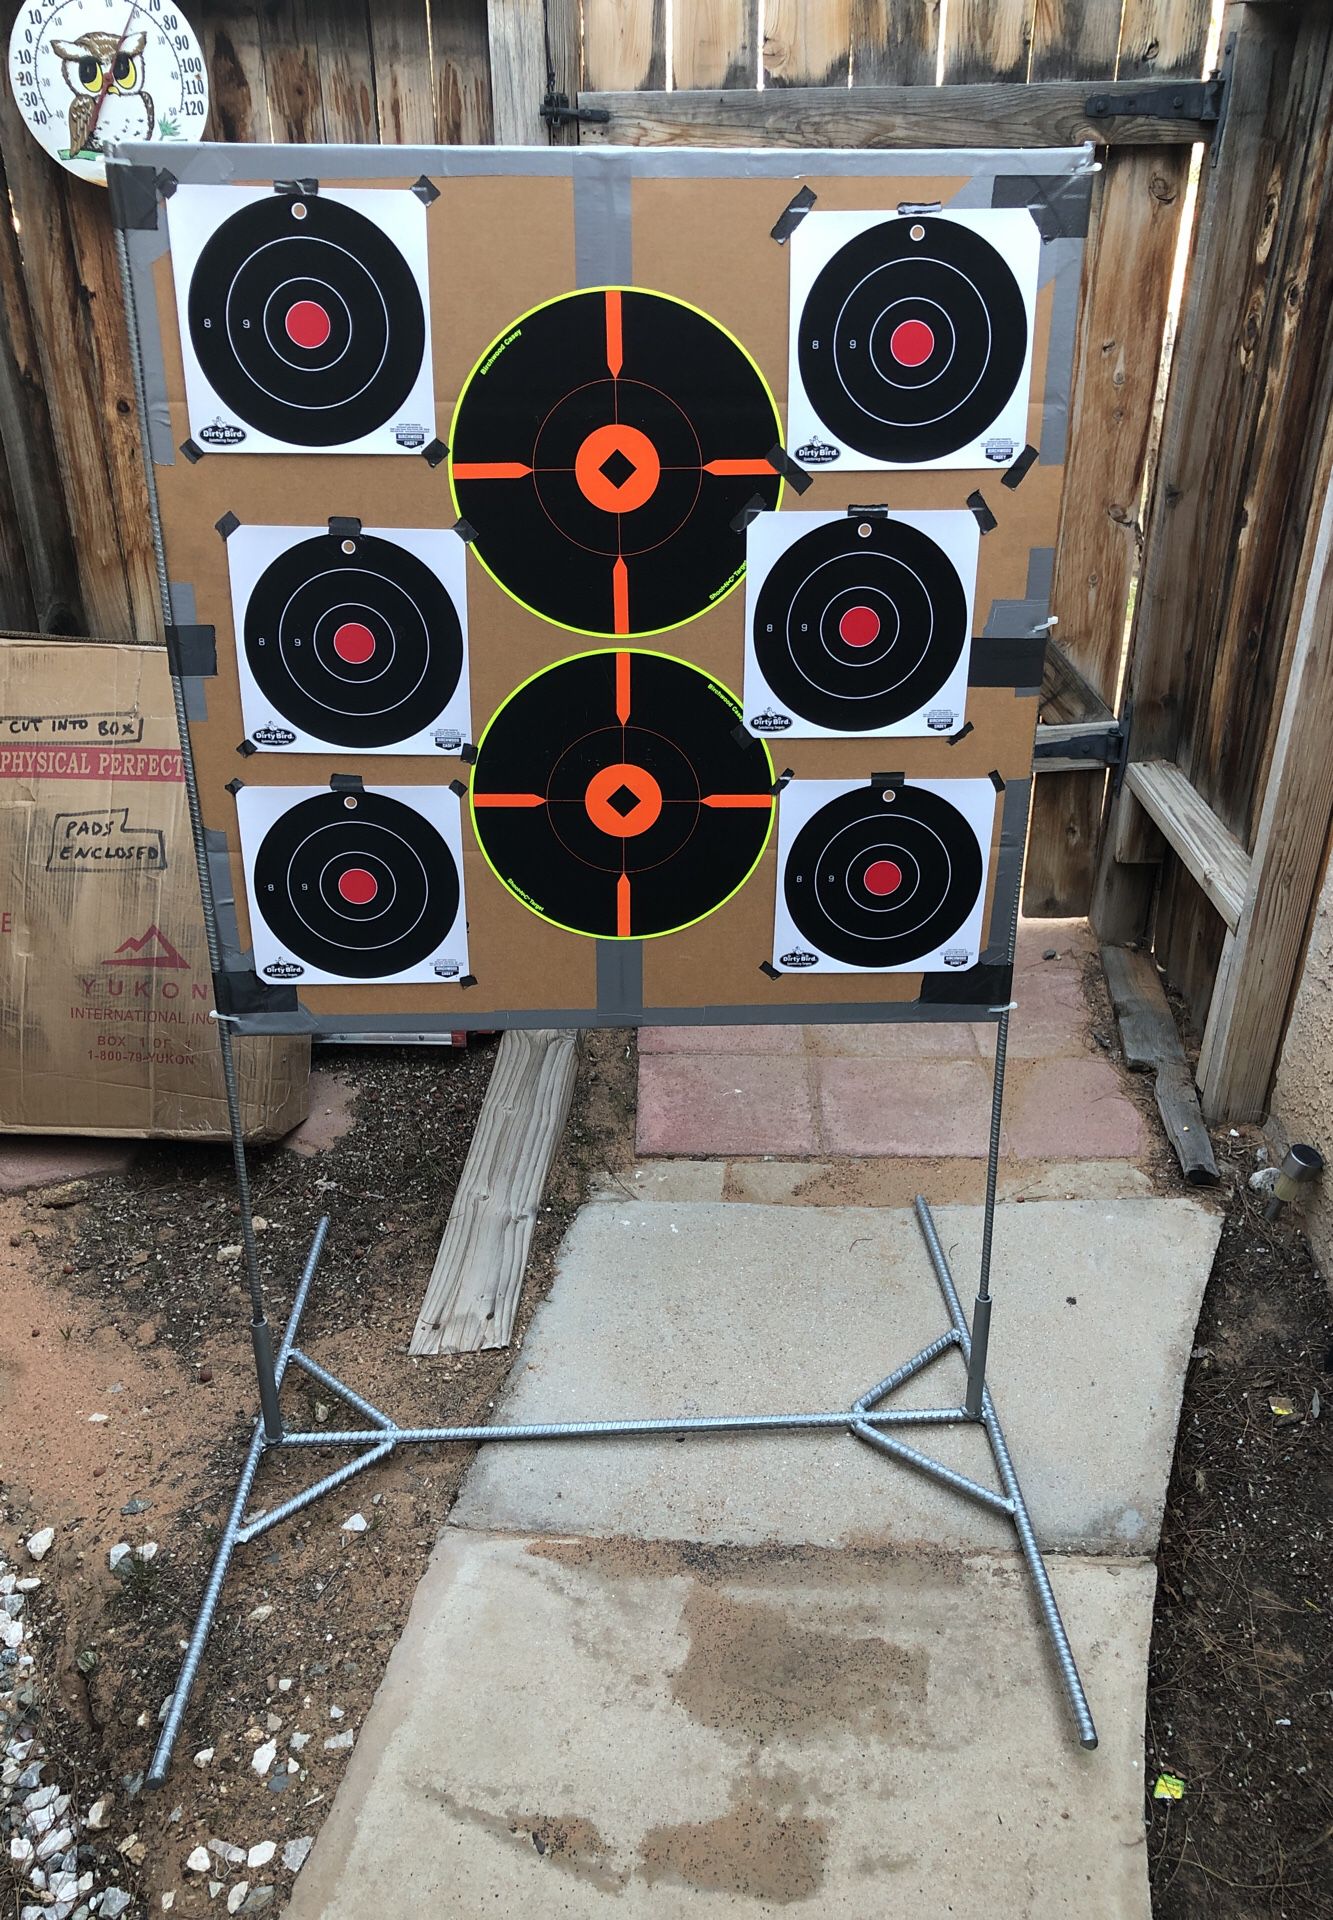 Rebar target stand for shooting